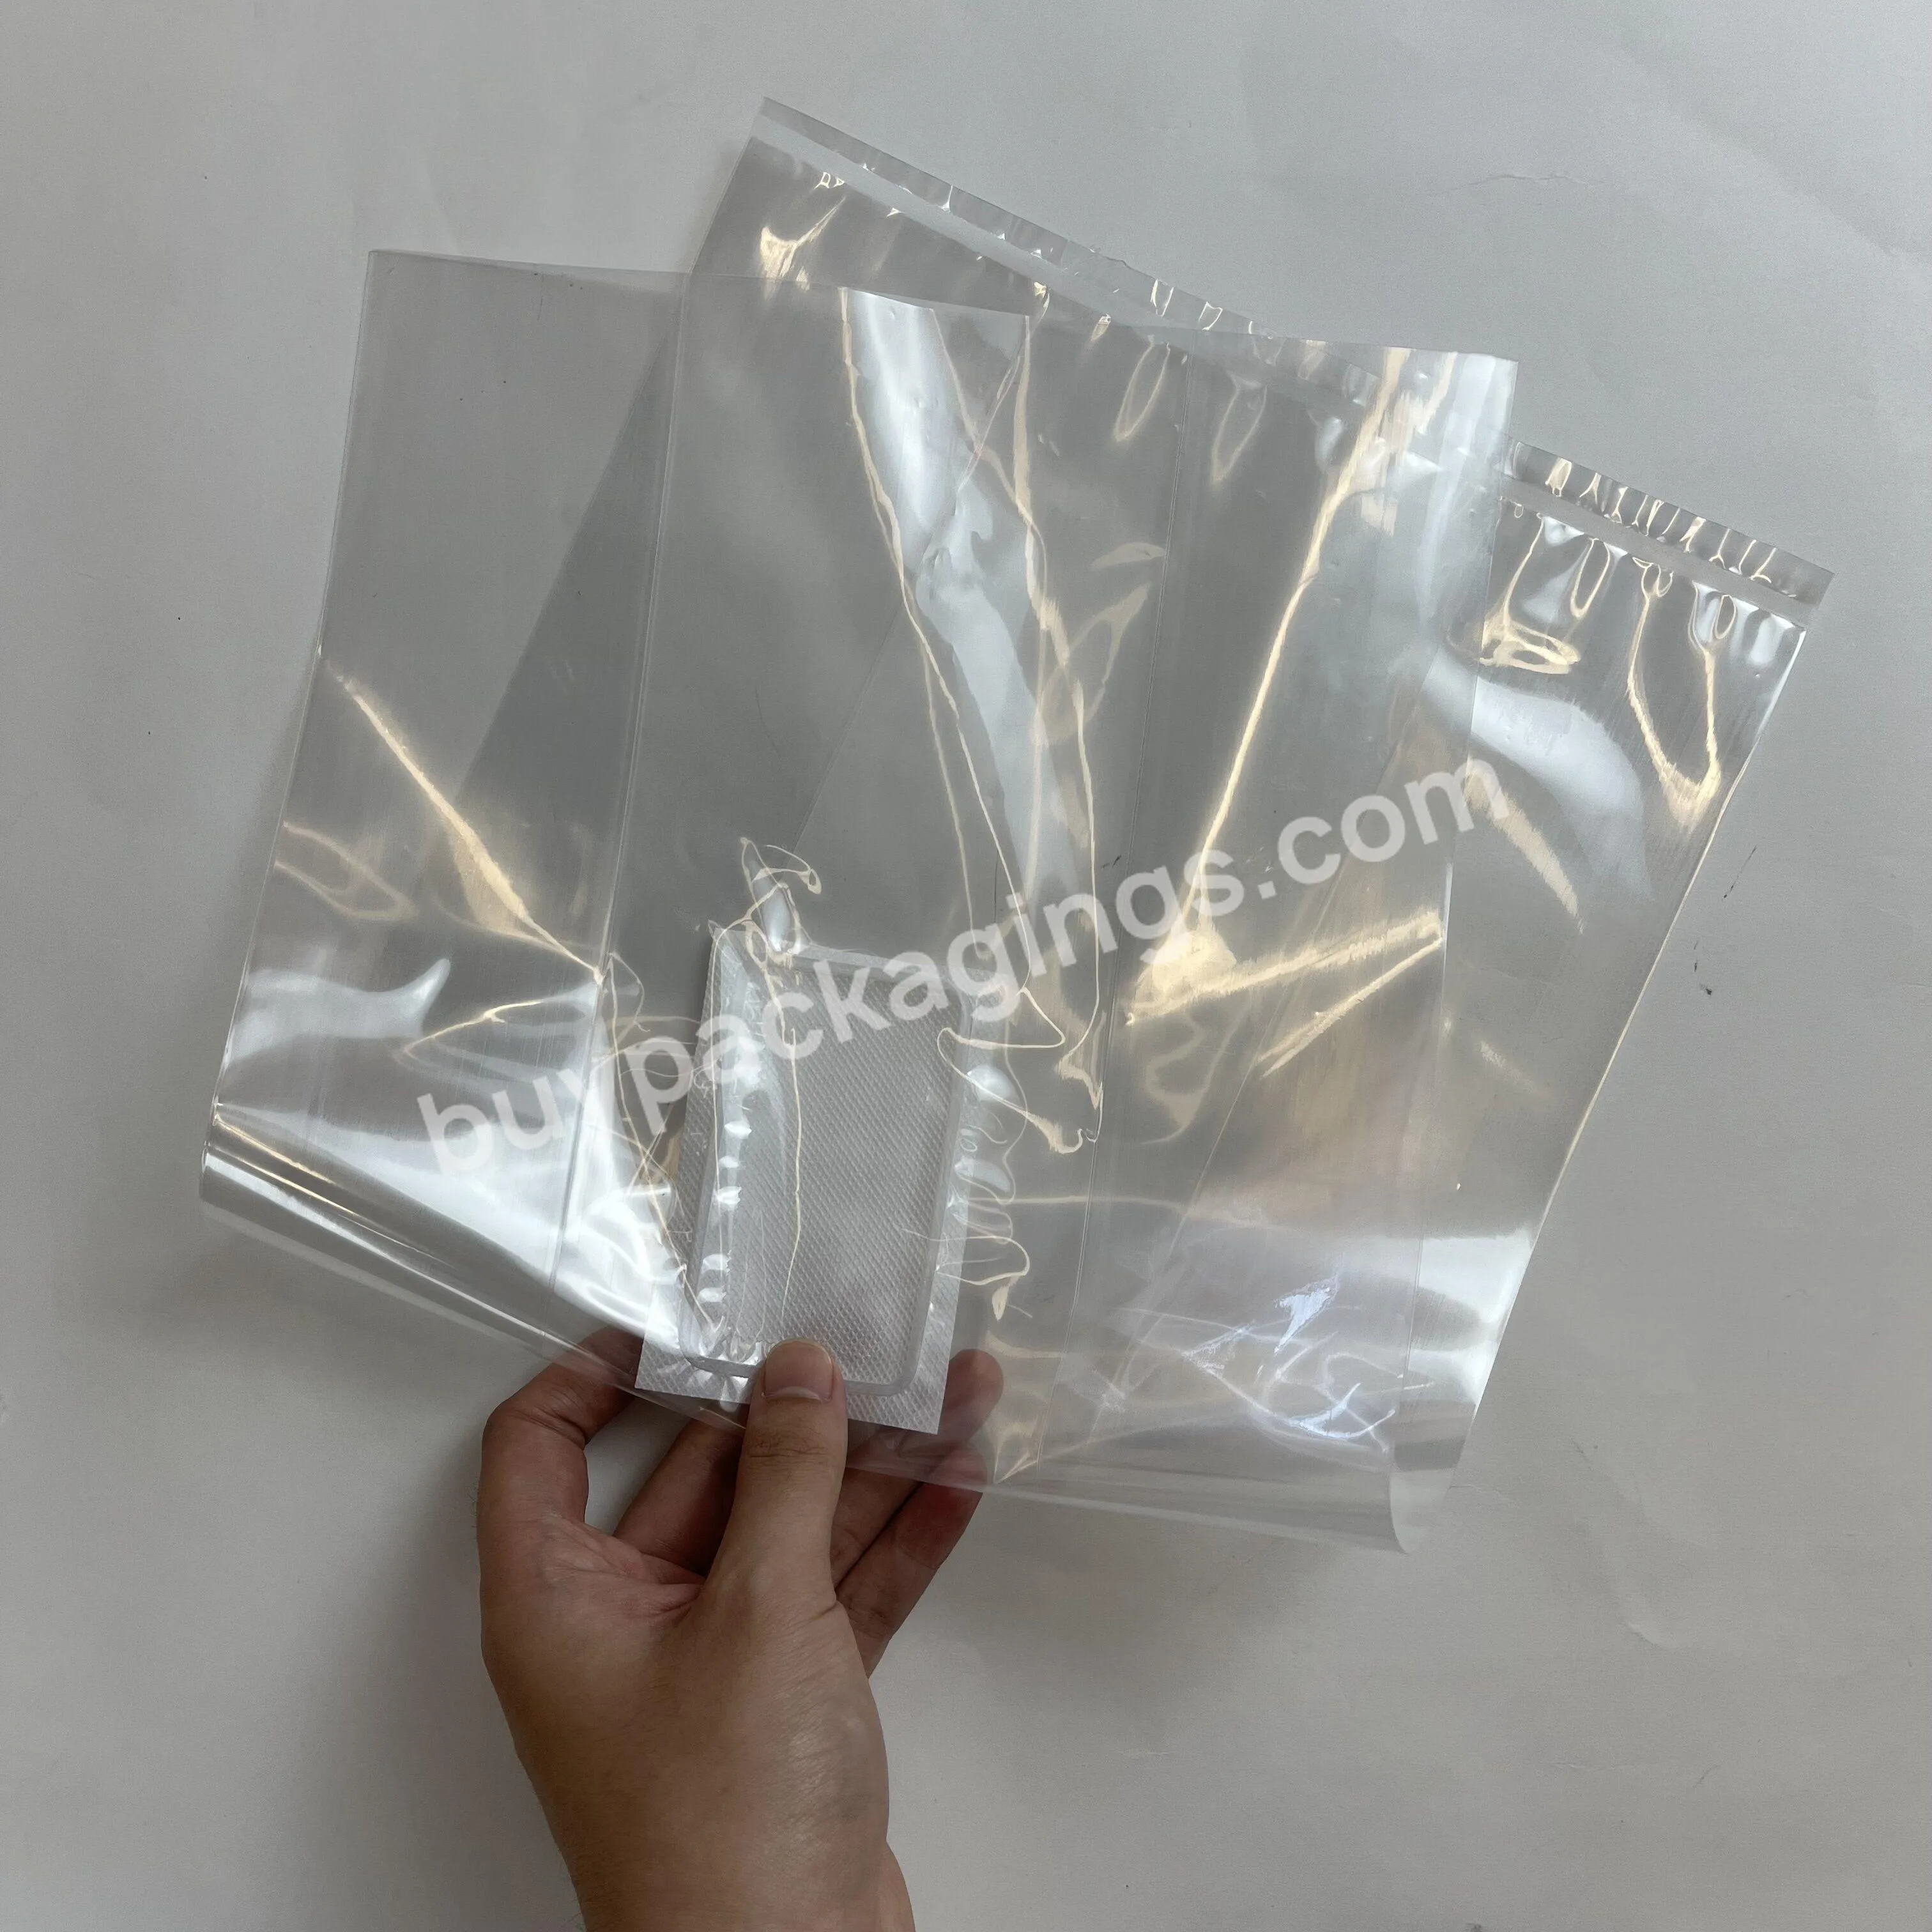 2.5mm Biohazard Polypropylene Plastic Autoclavable Spawn Mushroom Cultivation Breathable Bag - Buy Polypropylene Plastic Bag Mushroom,Autoclavable Spawn Bags,Biohazard Autoclave Bag.